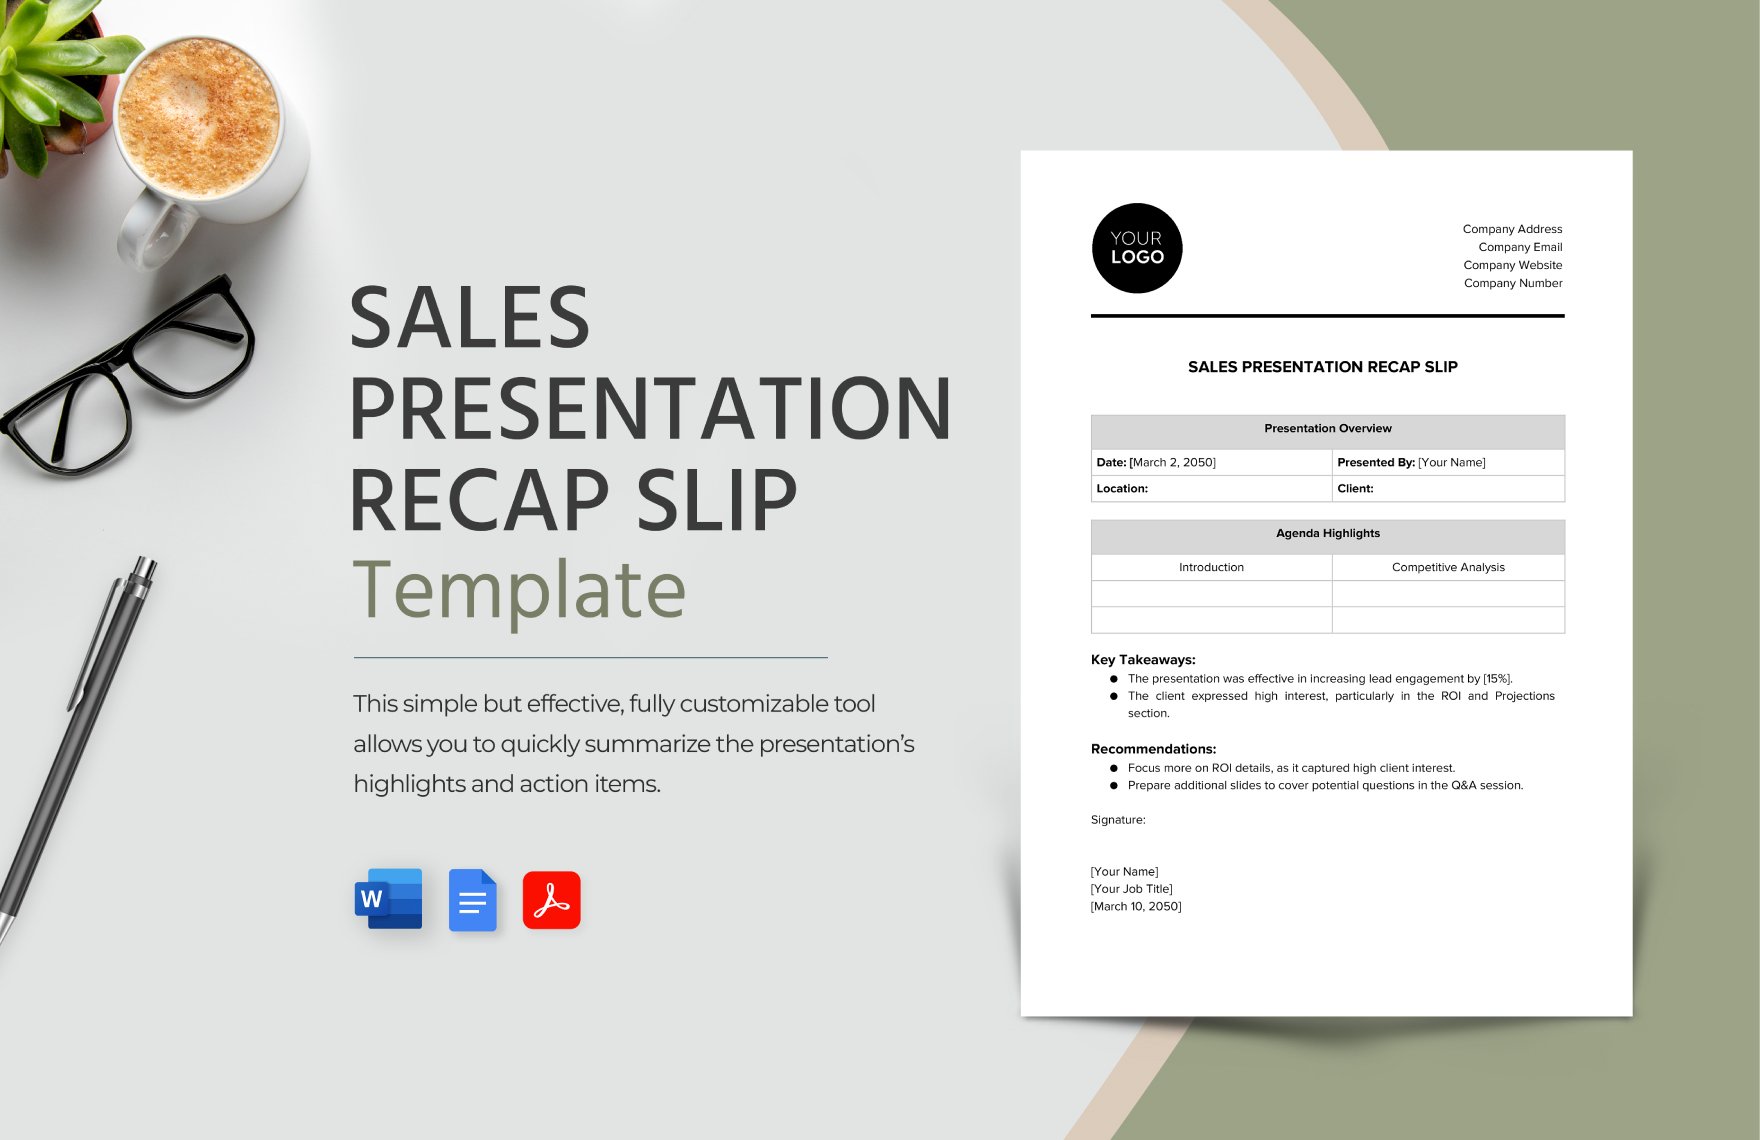 Sales Presentation Recap Slip Template in Word, Google Docs, PDF